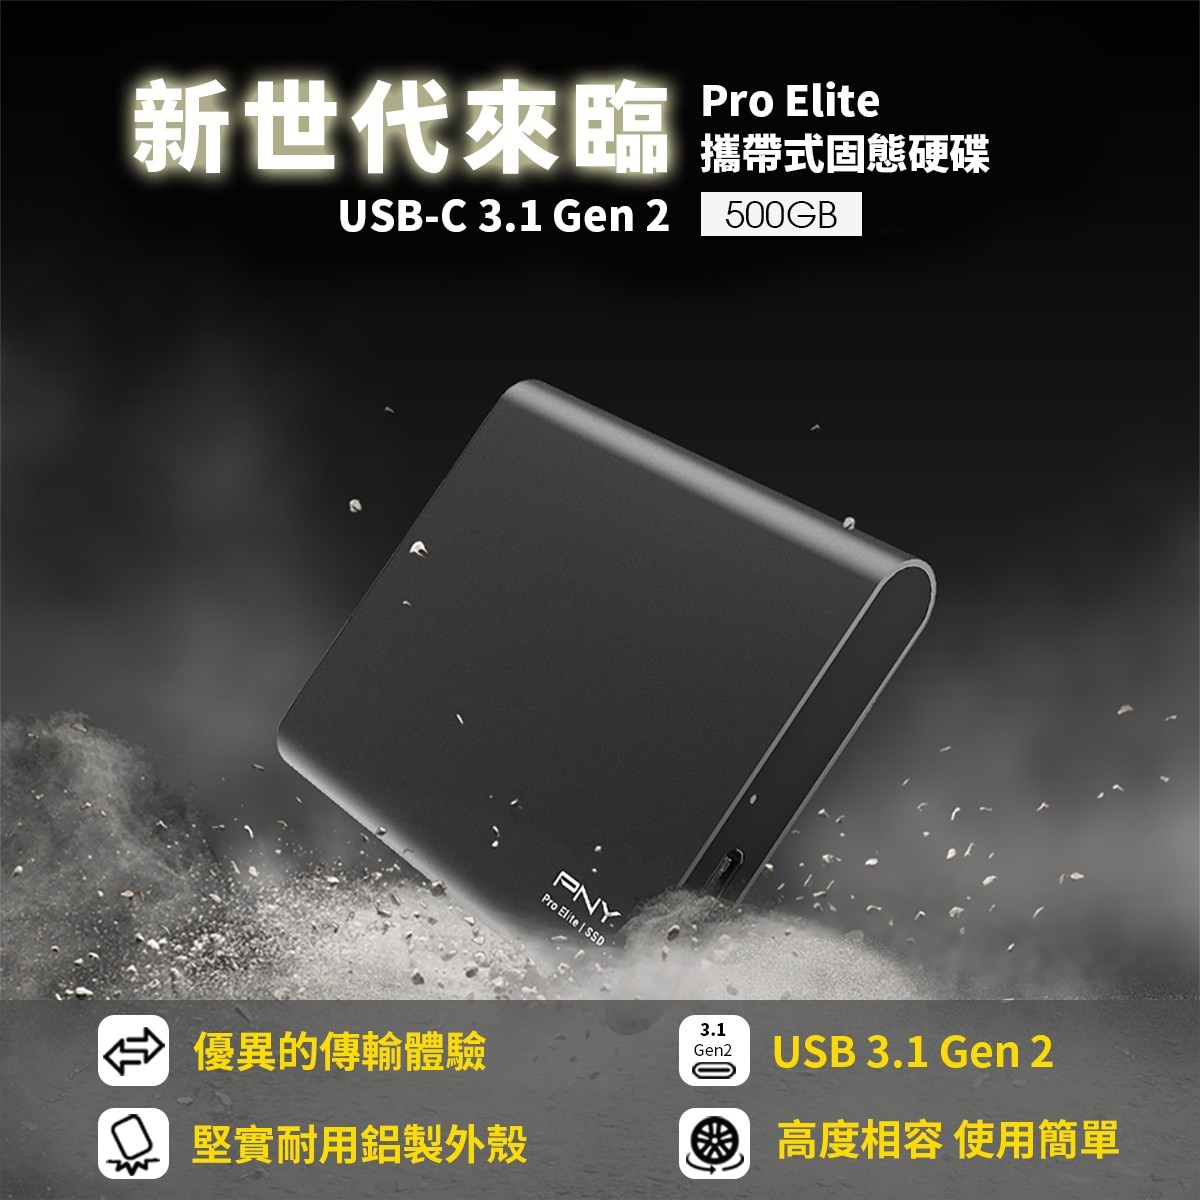 PNY Pro Elite USB3.1 Type-C 500G外接式固態硬碟，讀取速度最高可達每秒865MB，寫入速度最高可達每秒875MB，低功率消耗。